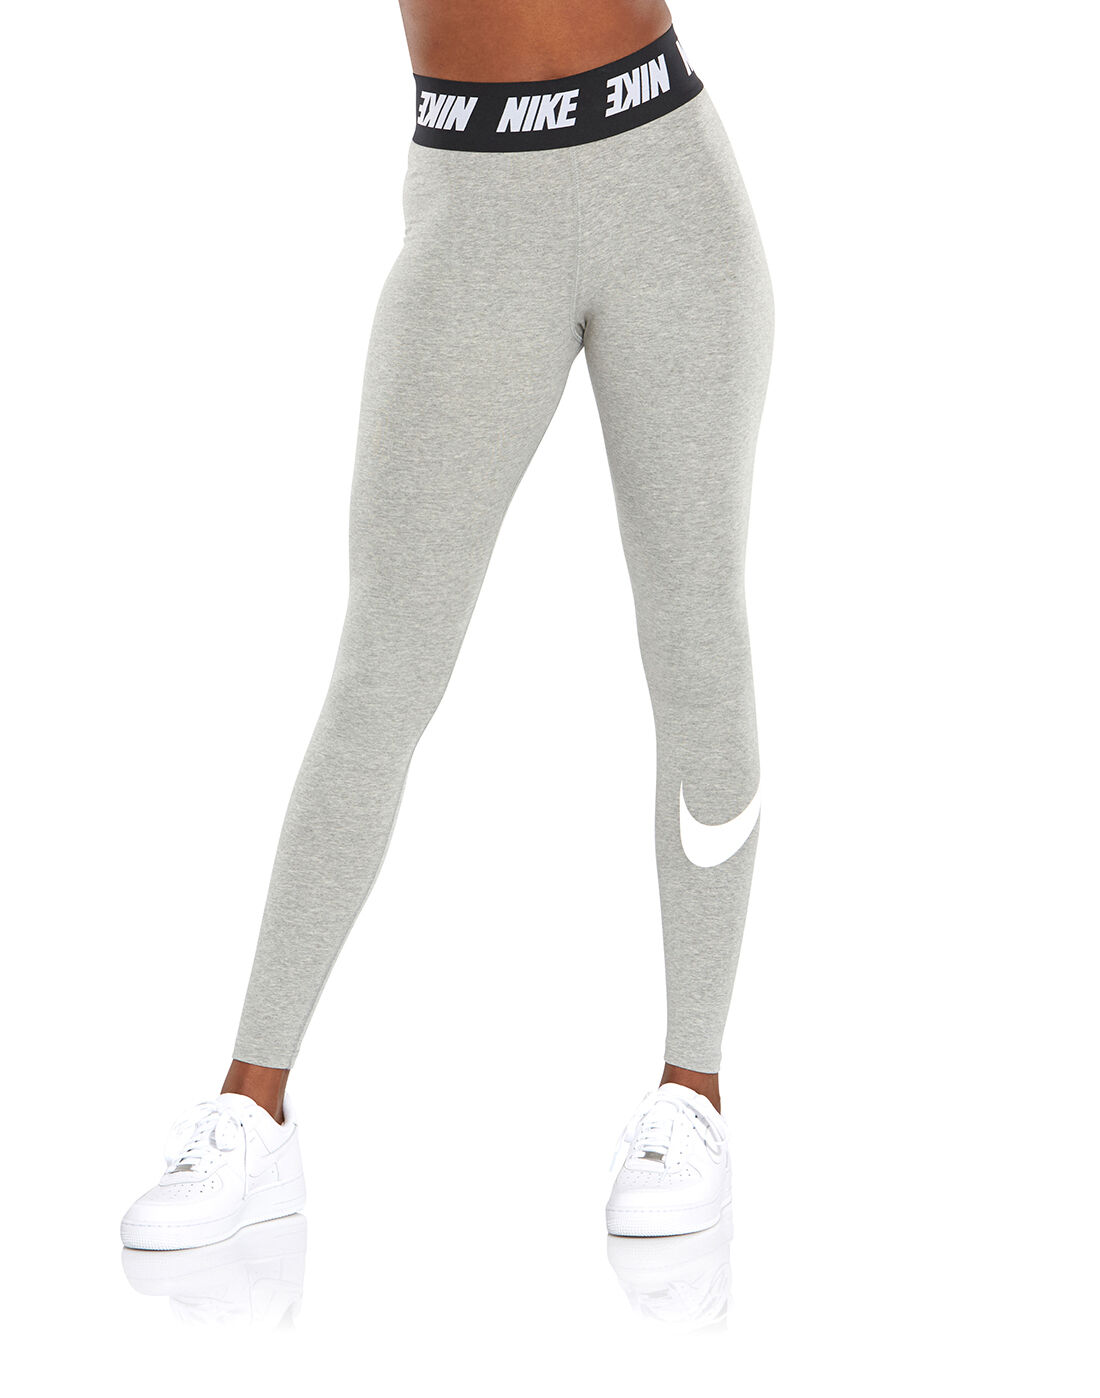 grey nike sports leggings